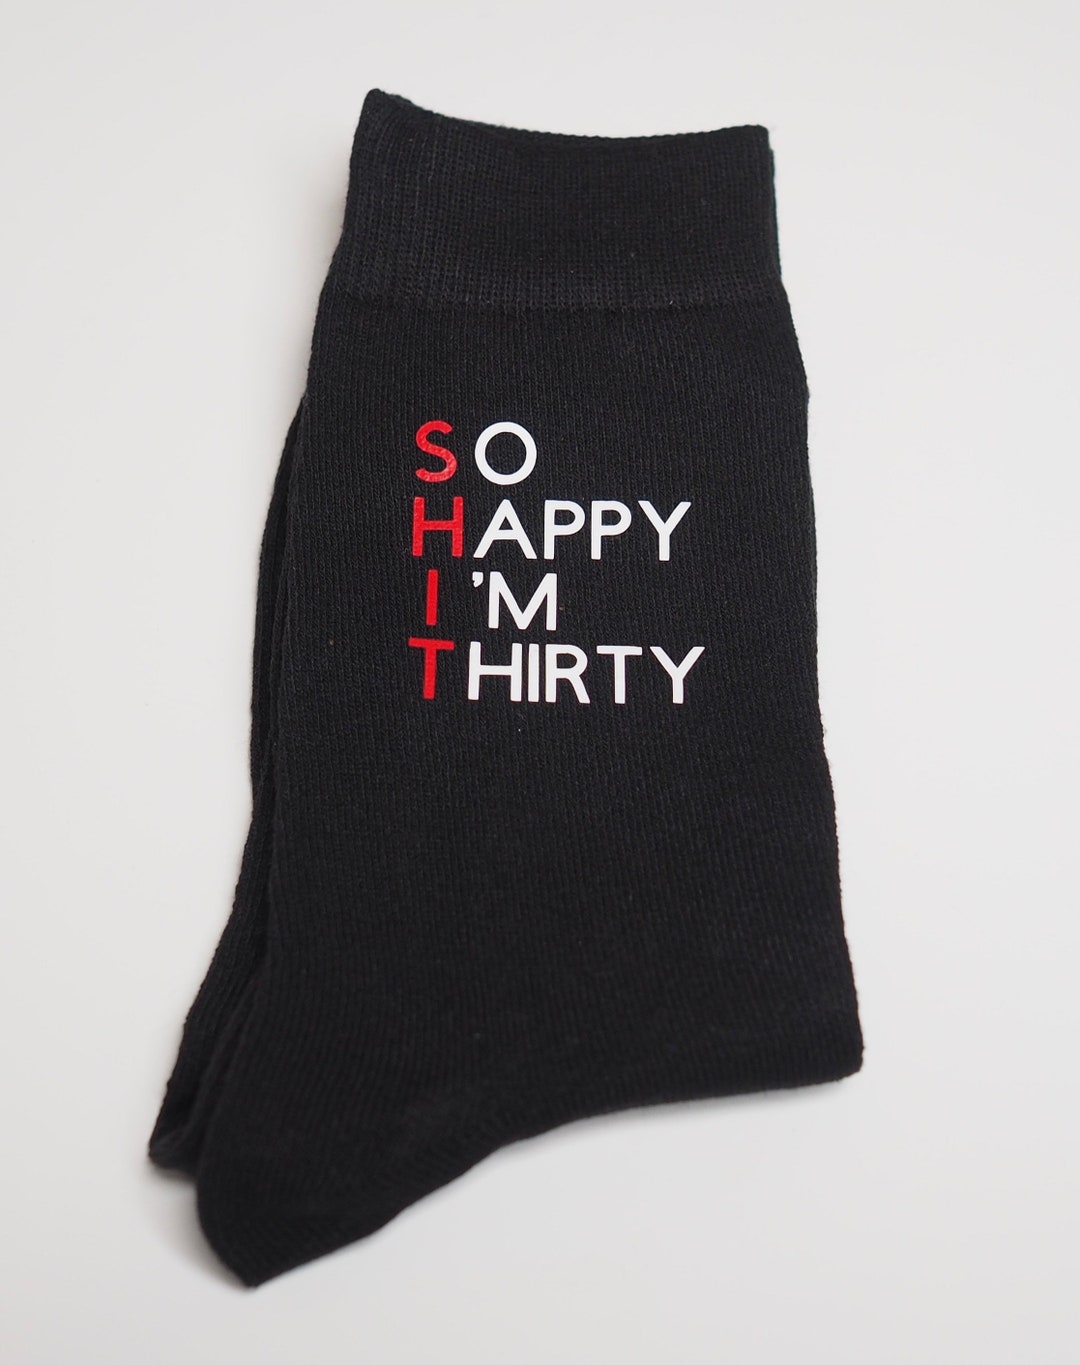 Shit Socks/30th Birthday Socks/ 30th Gift/ Swear Socks/novelty Socks ...